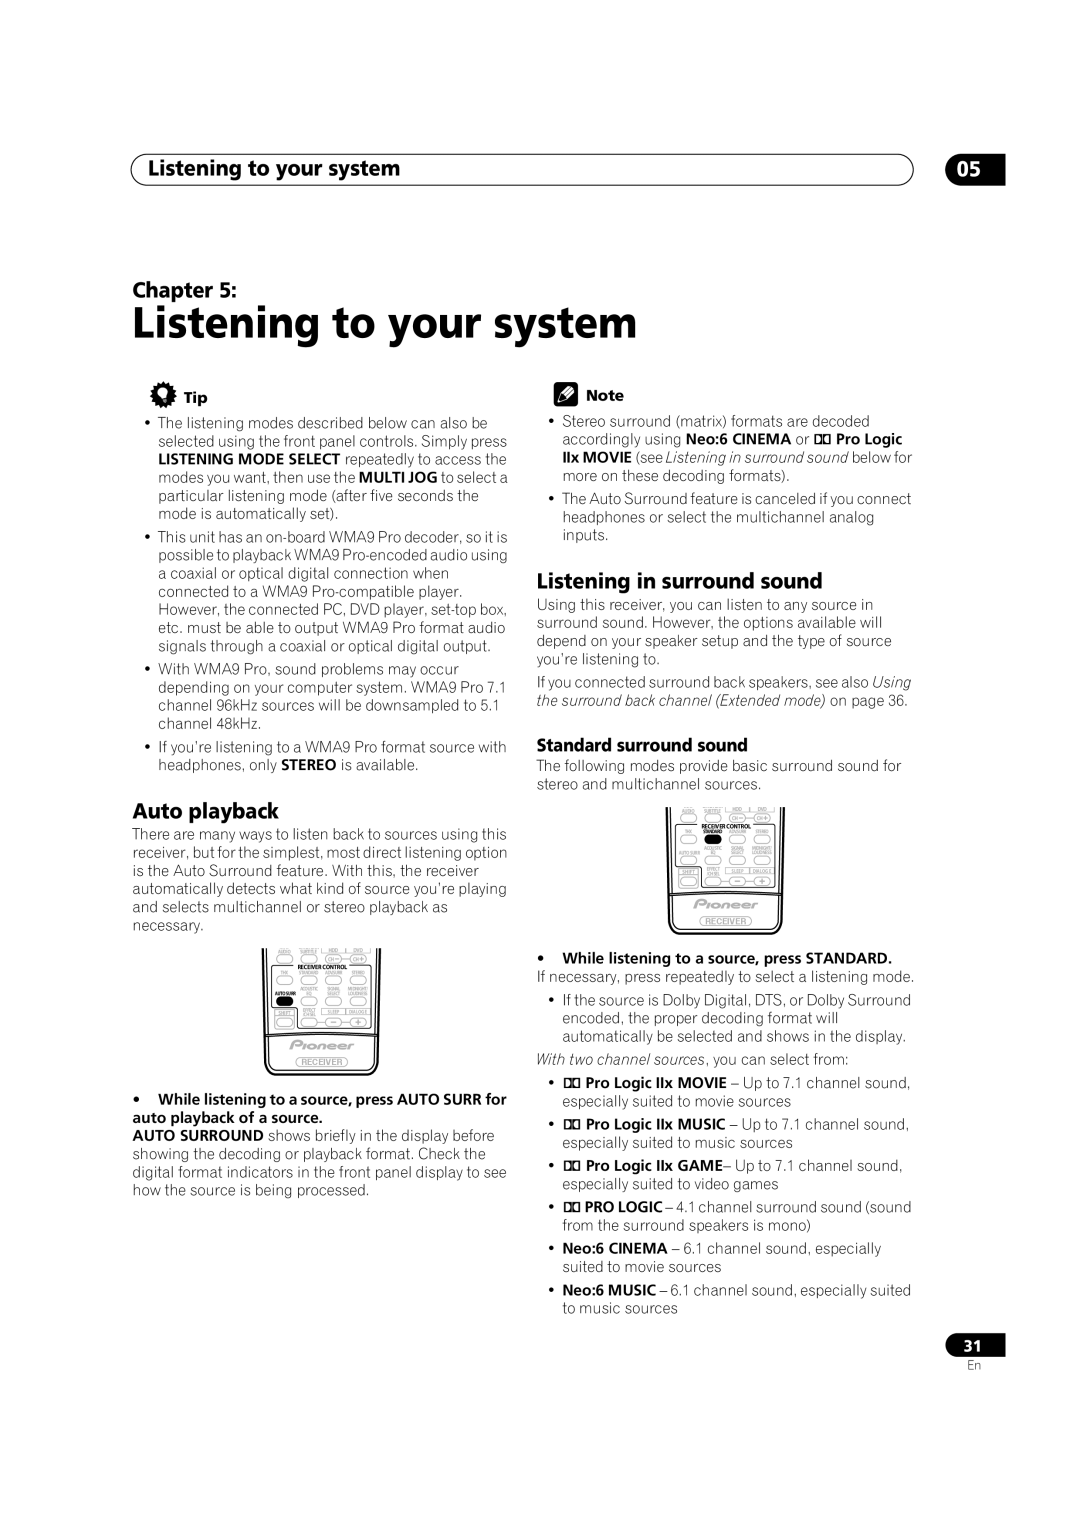 Pioneer VSX-1015TX Listening to your system, Chapter, Auto playback, Listening in surround sound, Standard surround sound 